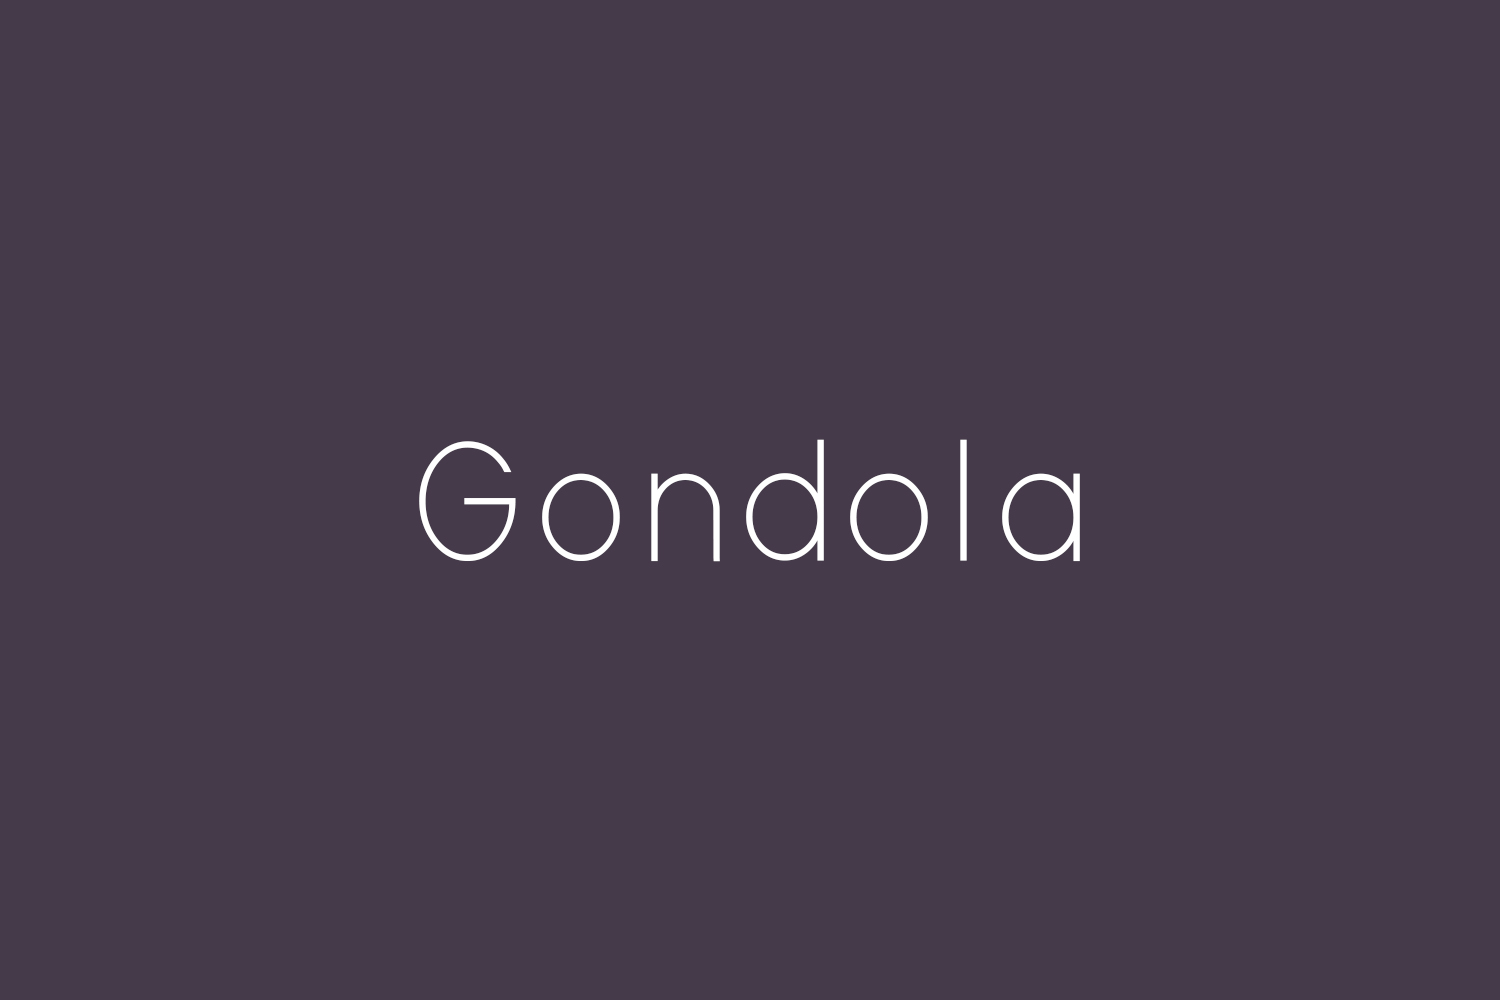 Gondola Free Font